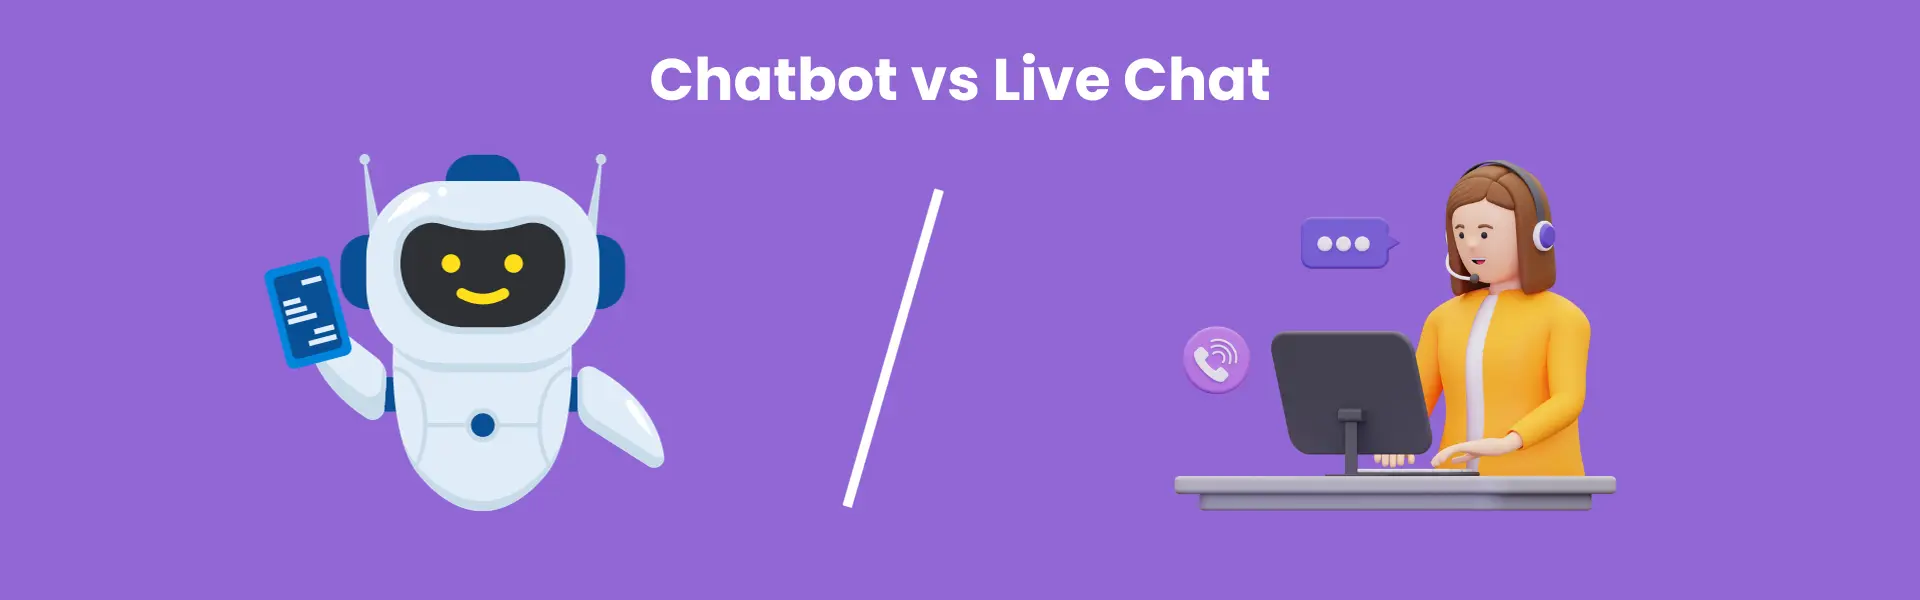 Chatbot vs. Live Chat